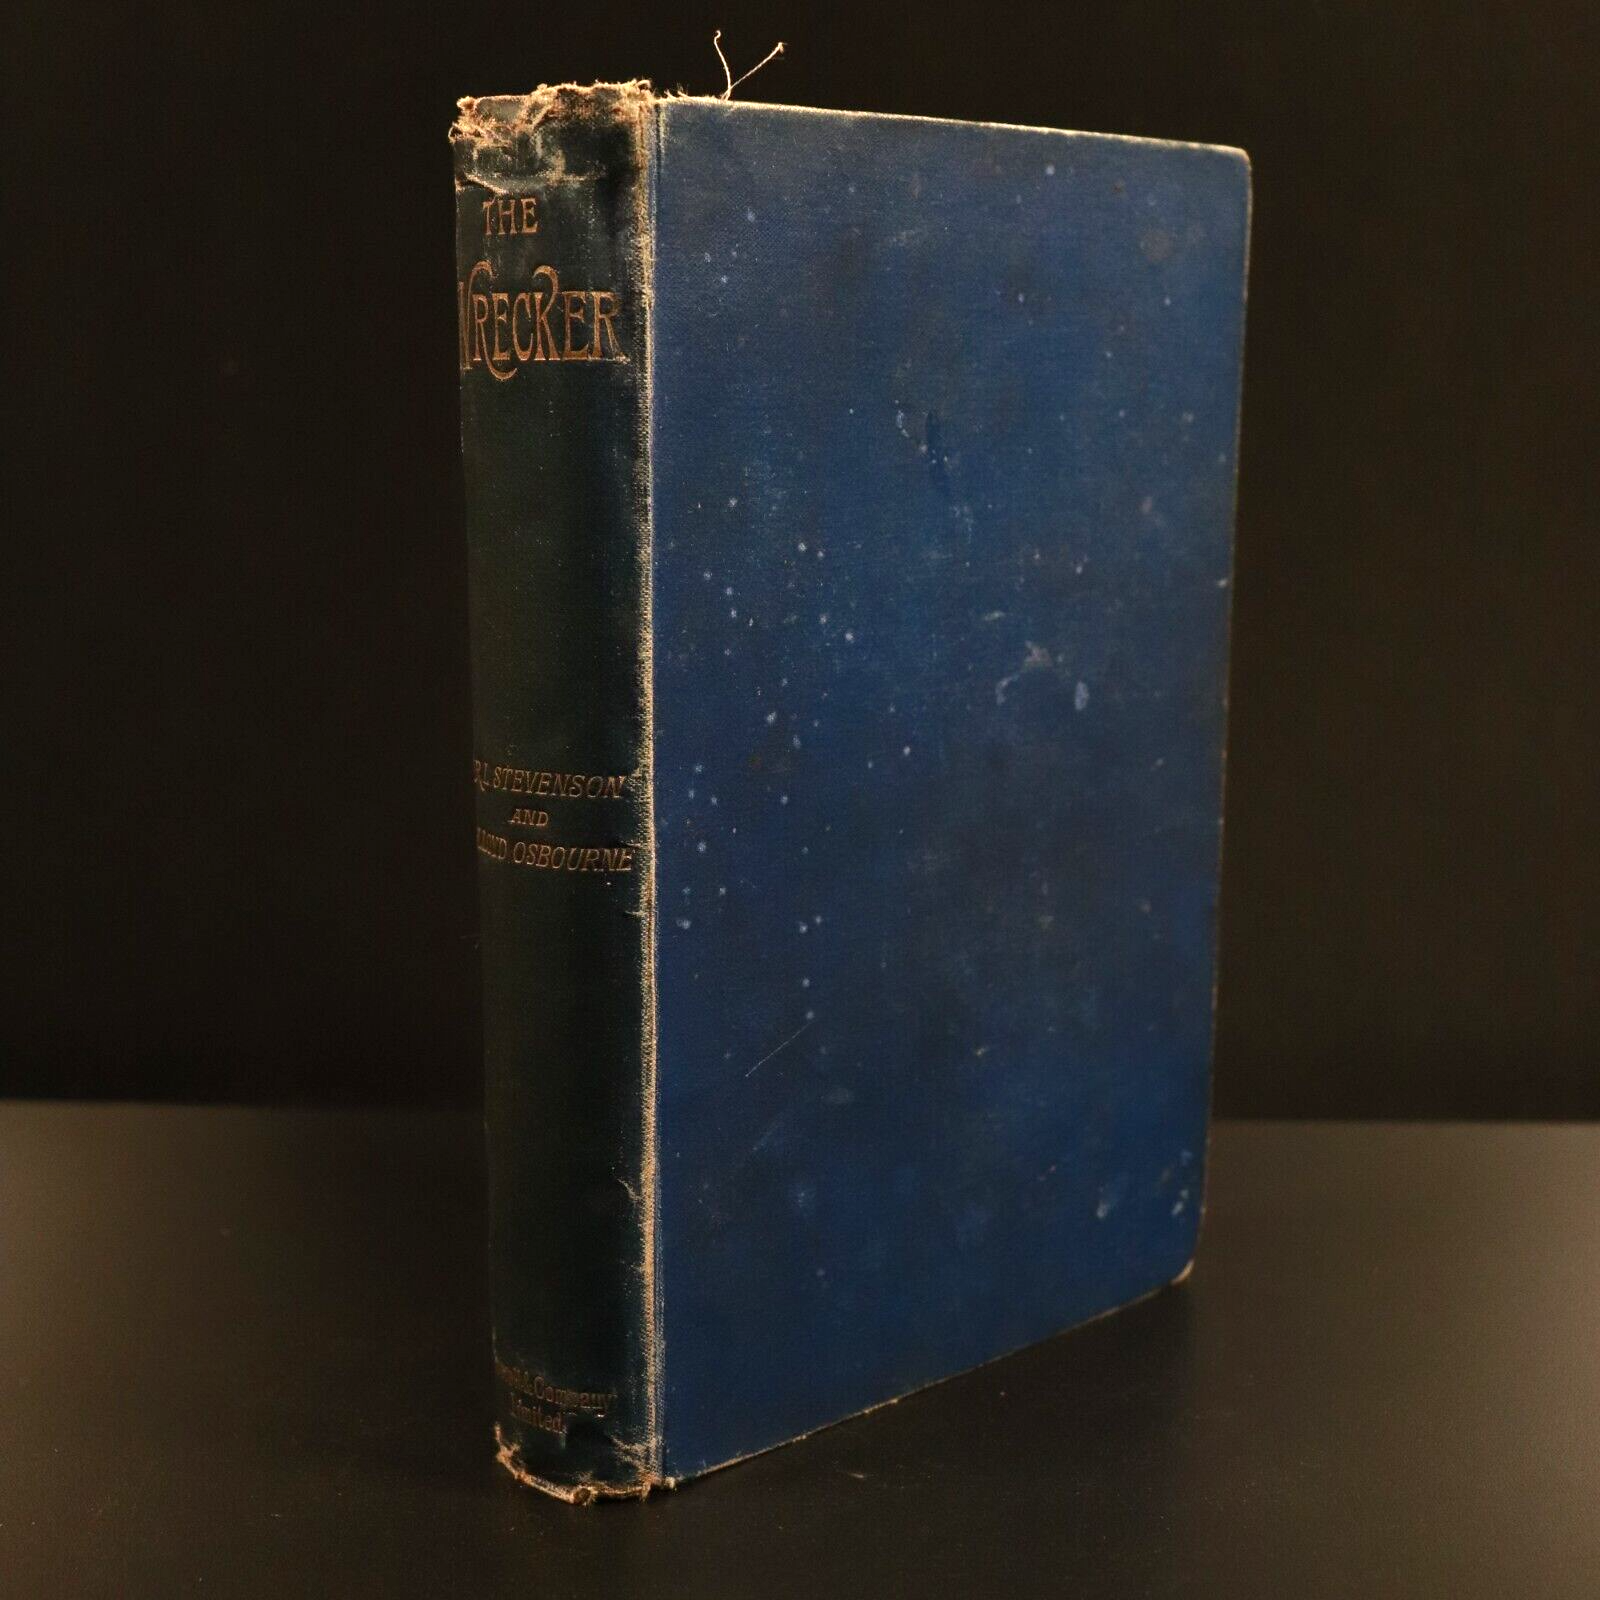 1892 The Wrecker by Robert Louis Stevenson Antique Scottish Fiction Book